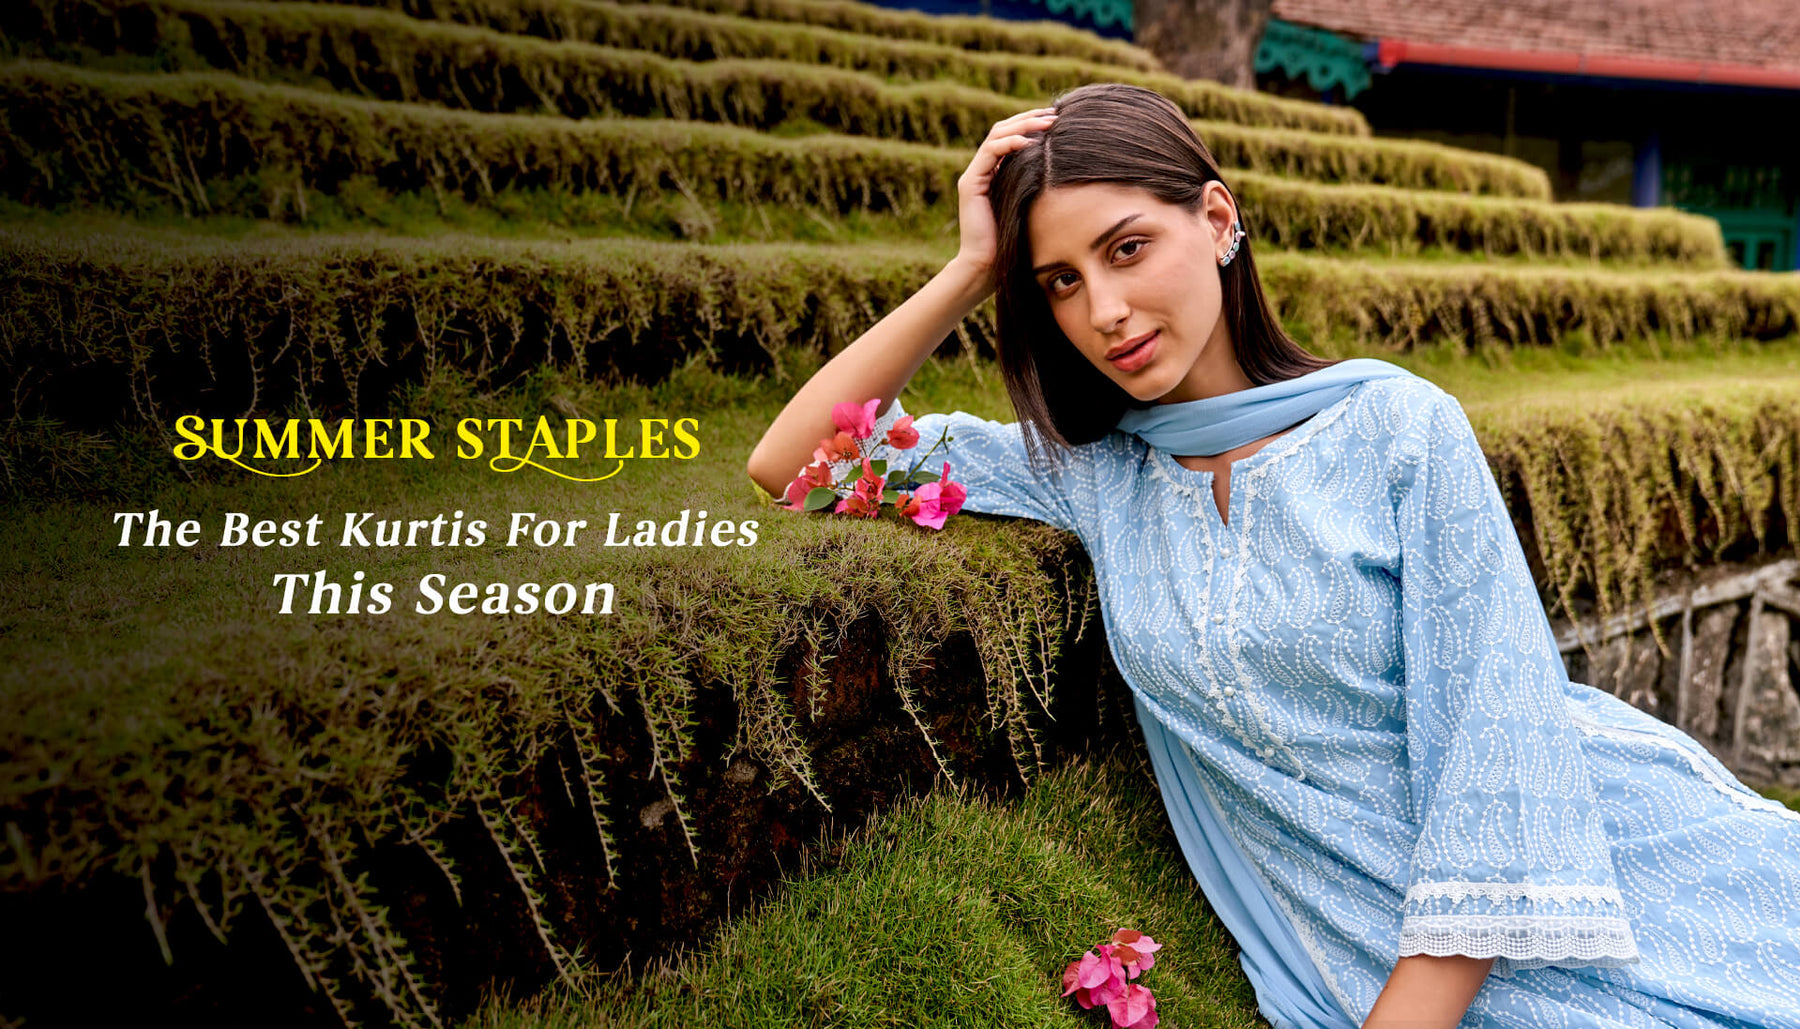 Summer Staples: The Best Kurtis For Ladies This Season